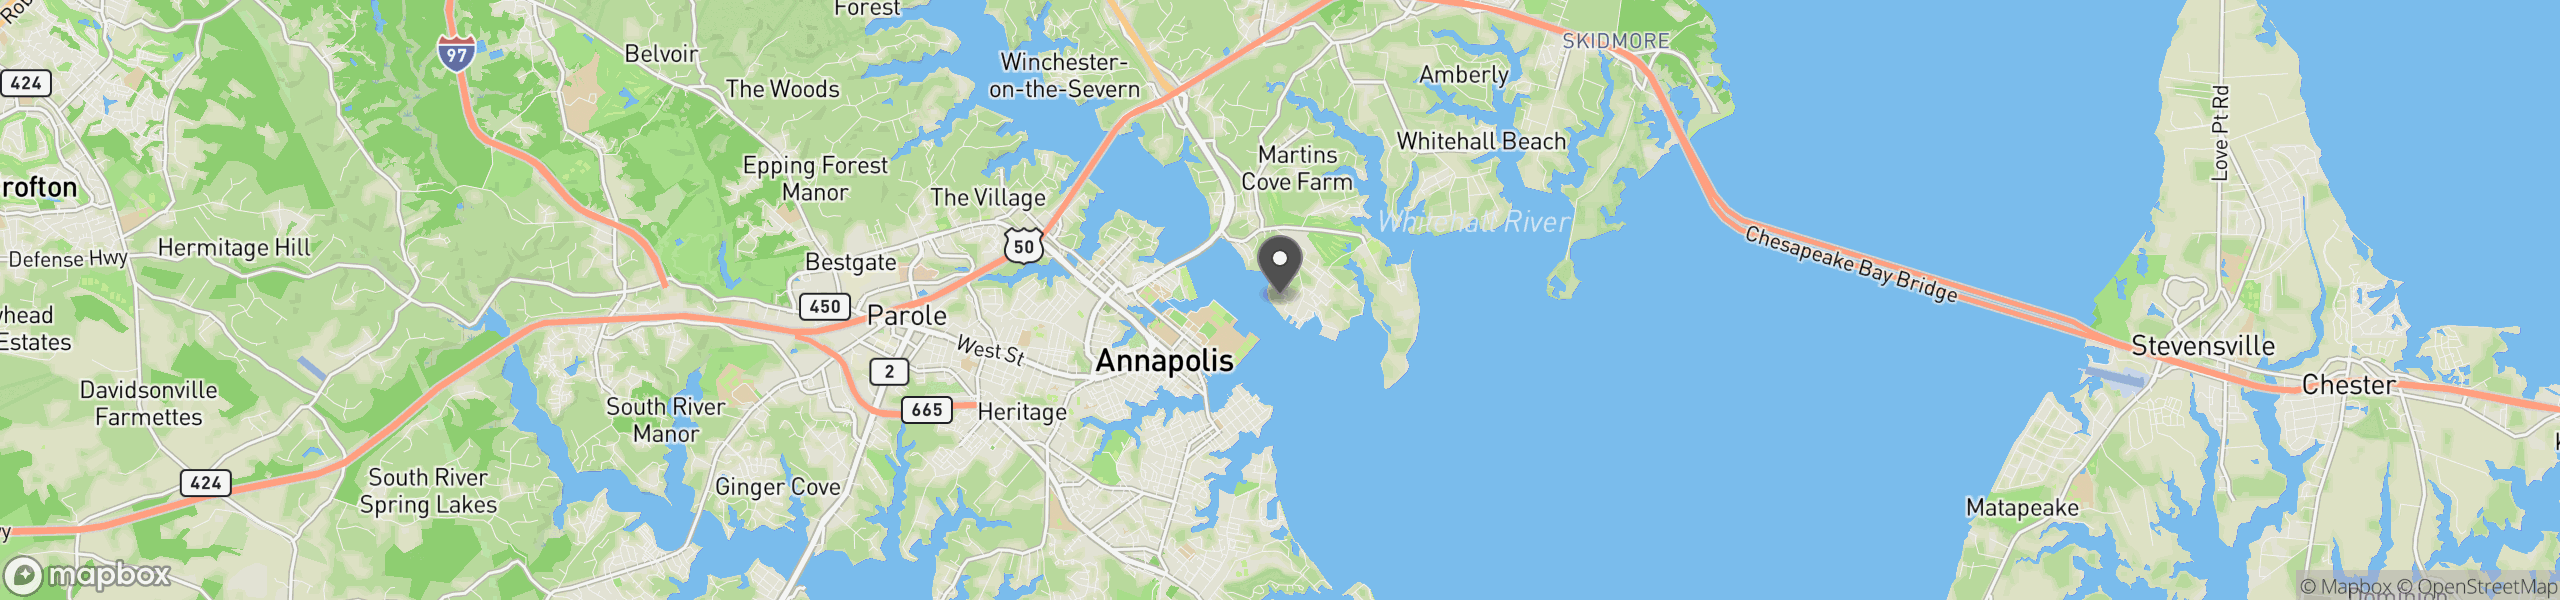 Annapolis, MD 21402